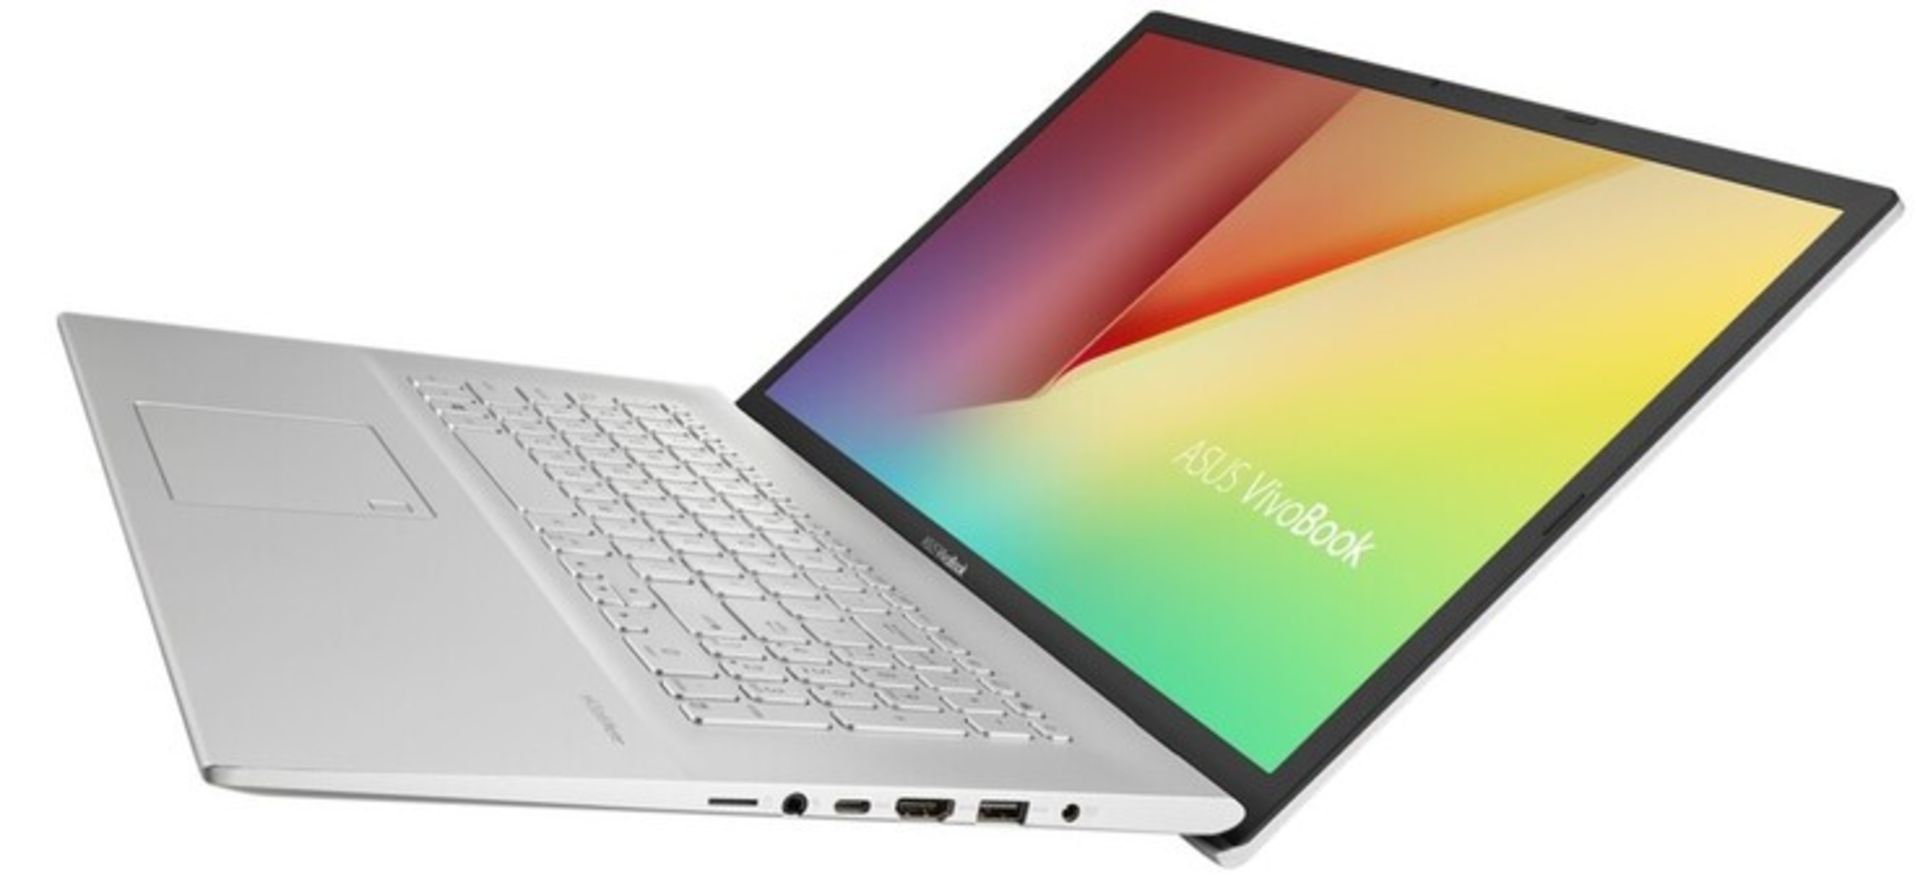 1 x Asus VivoBook 17.3 Inch Full HD Laptop Computer - Ryzen 5, 8GB, 256GB SSD - NO VAT ON THE HAMMER - Image 13 of 16